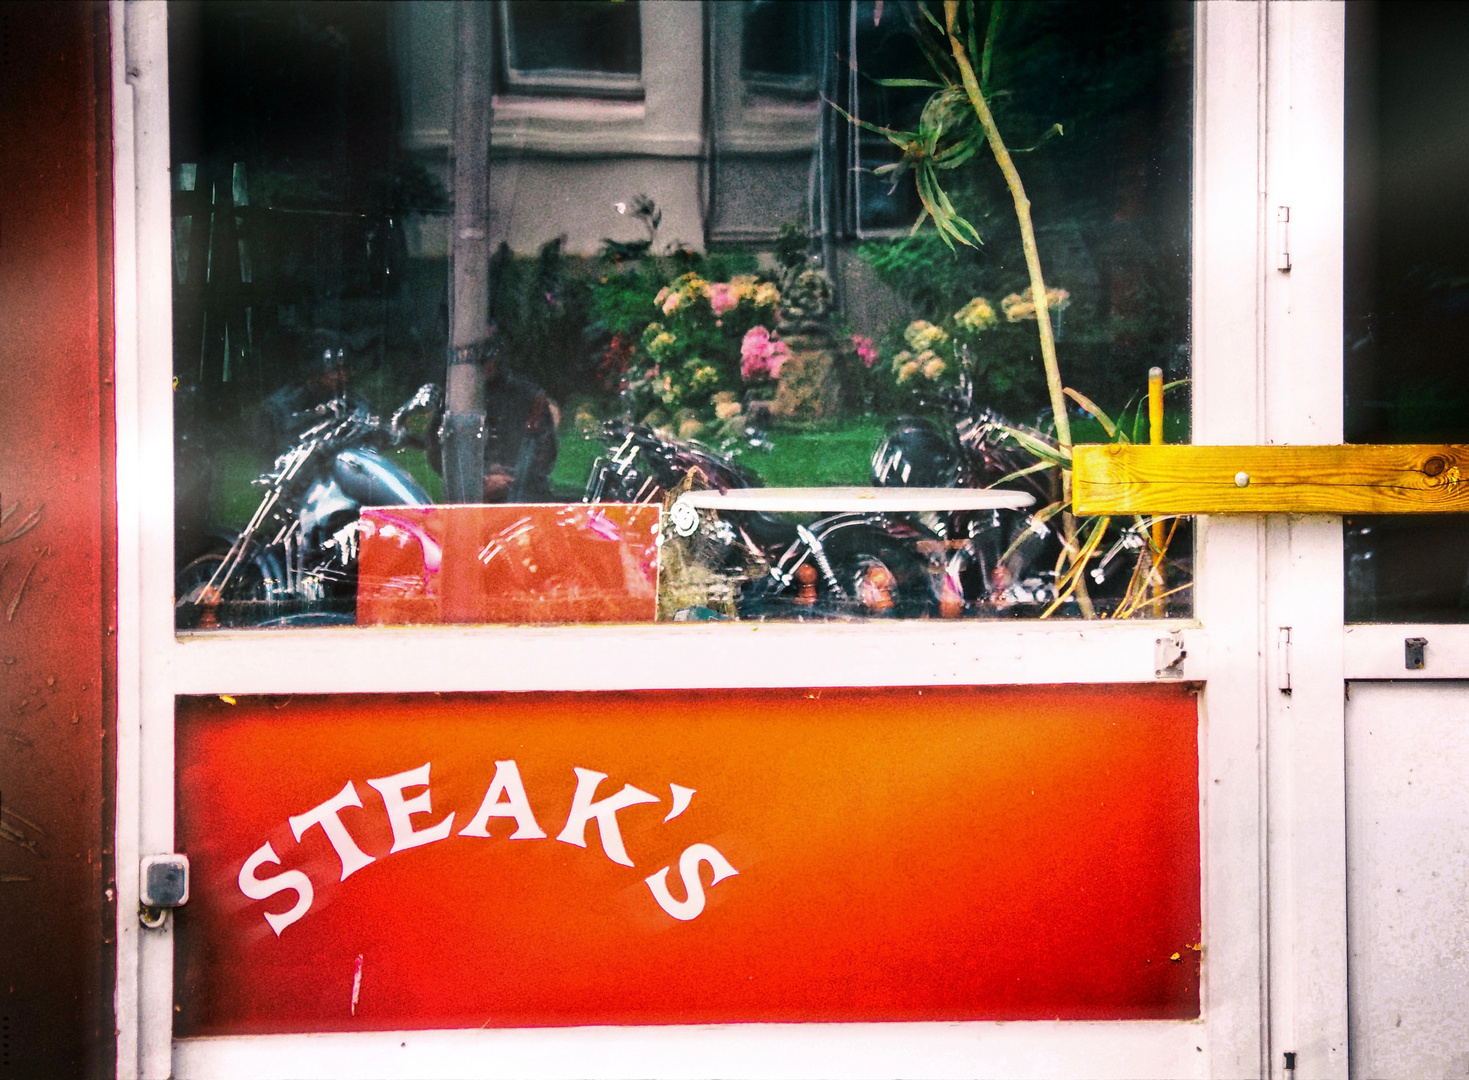 steak`s on orange